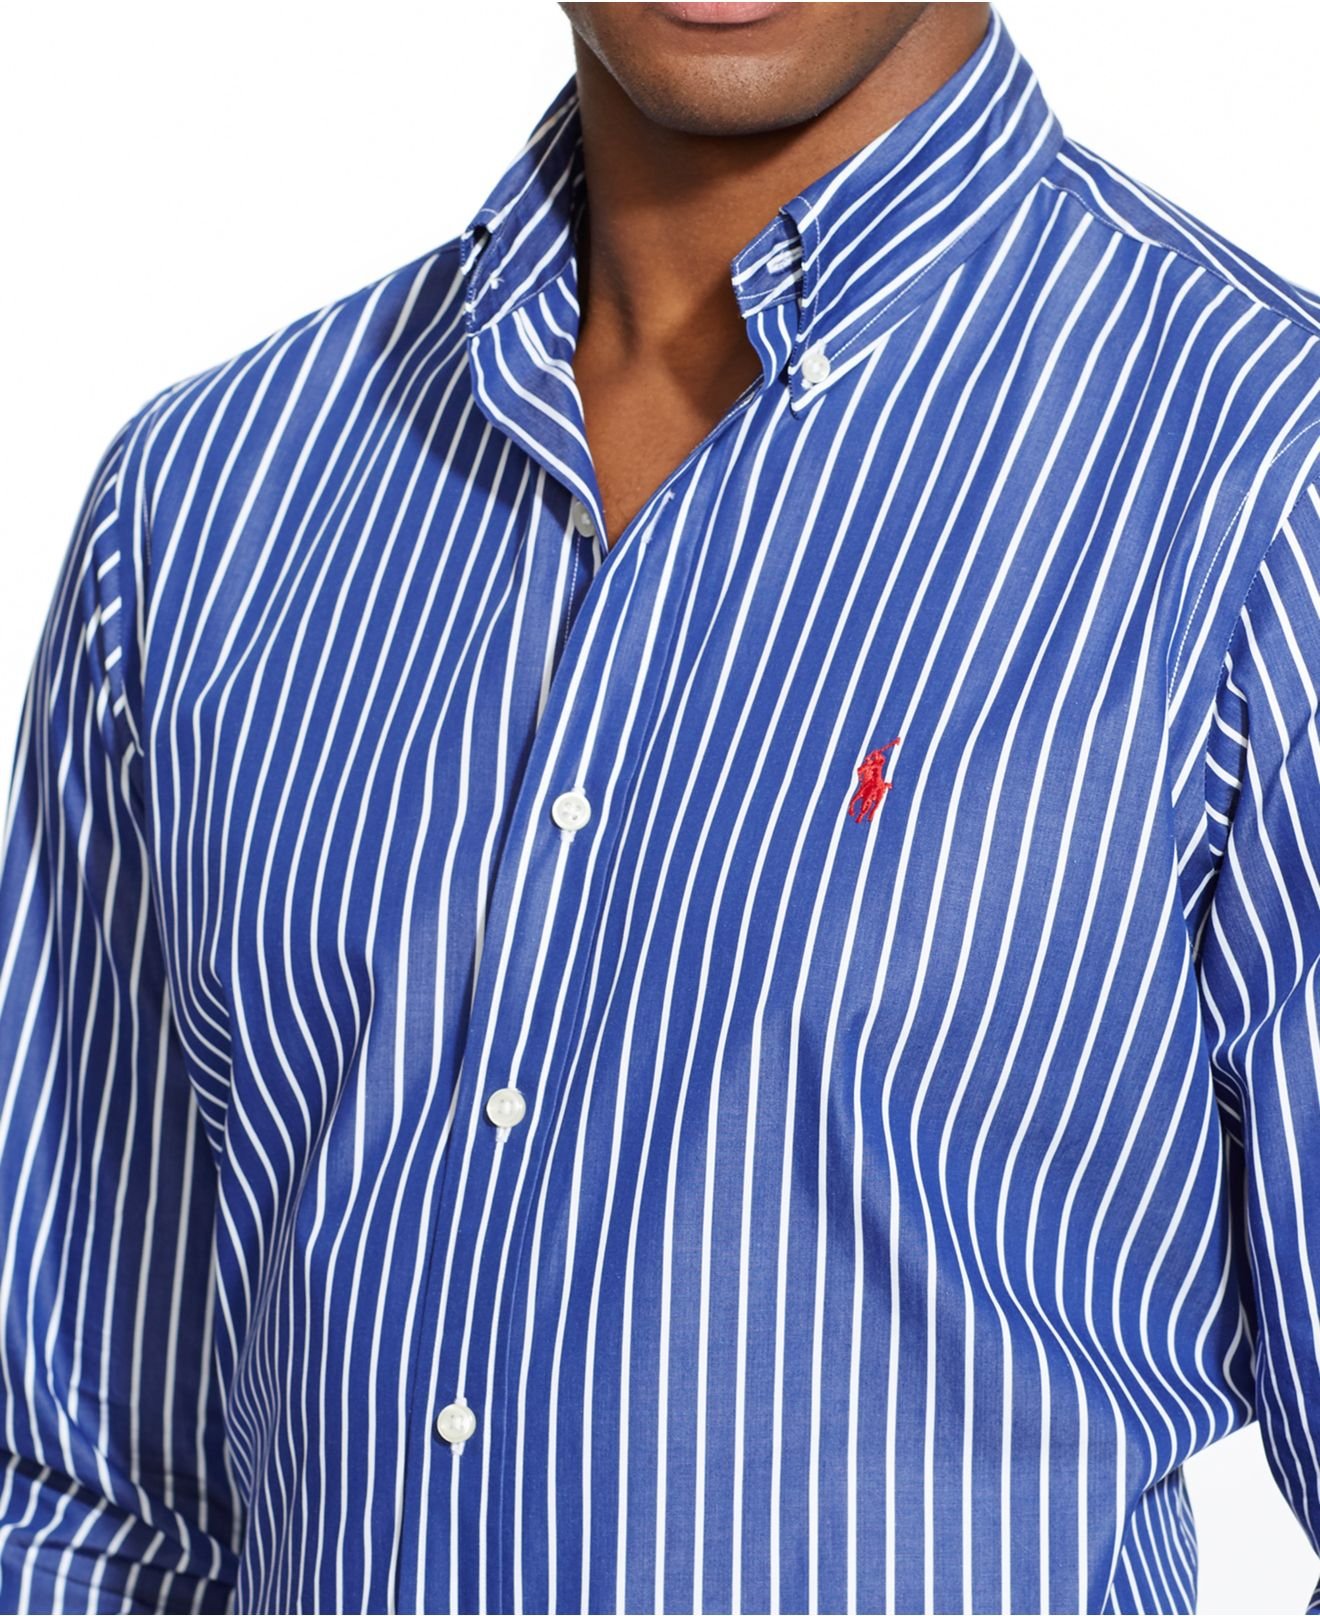 Lyst - Polo Ralph Lauren Men's Men's Long Sleeve Striped Poplin Shirt